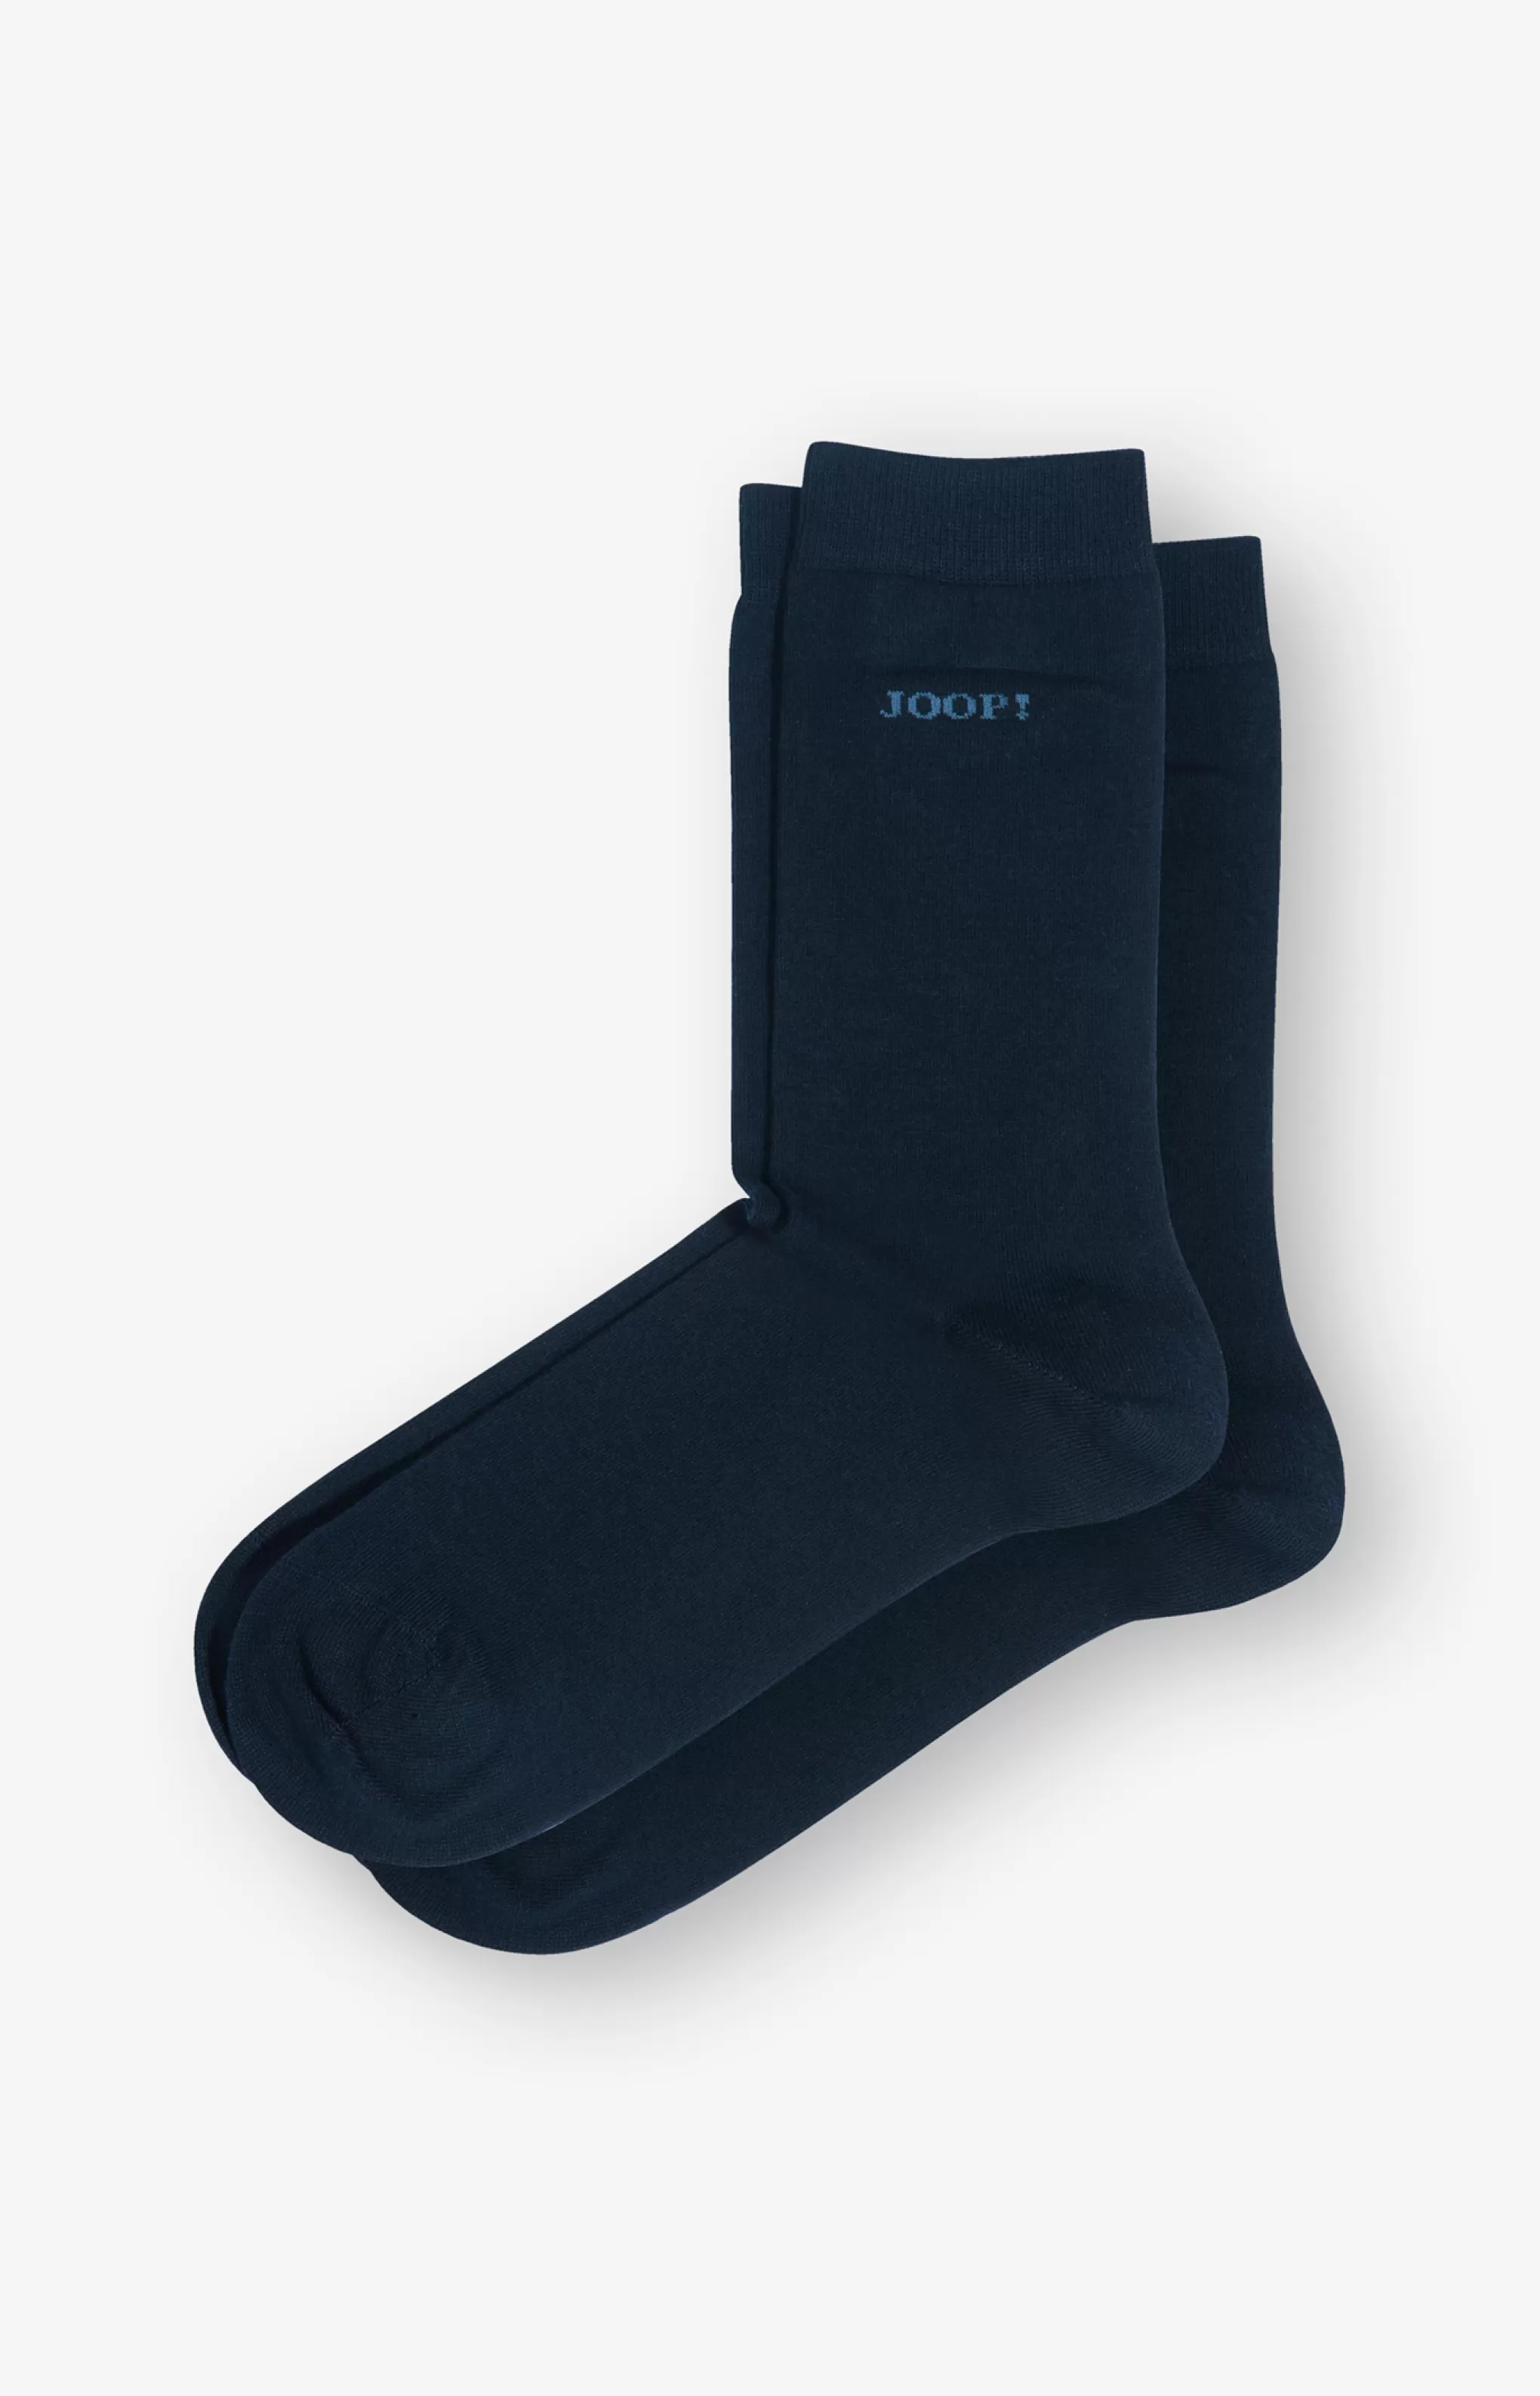 Socks*JOOP Socks 2-pack finest organic cotton socks in Marine